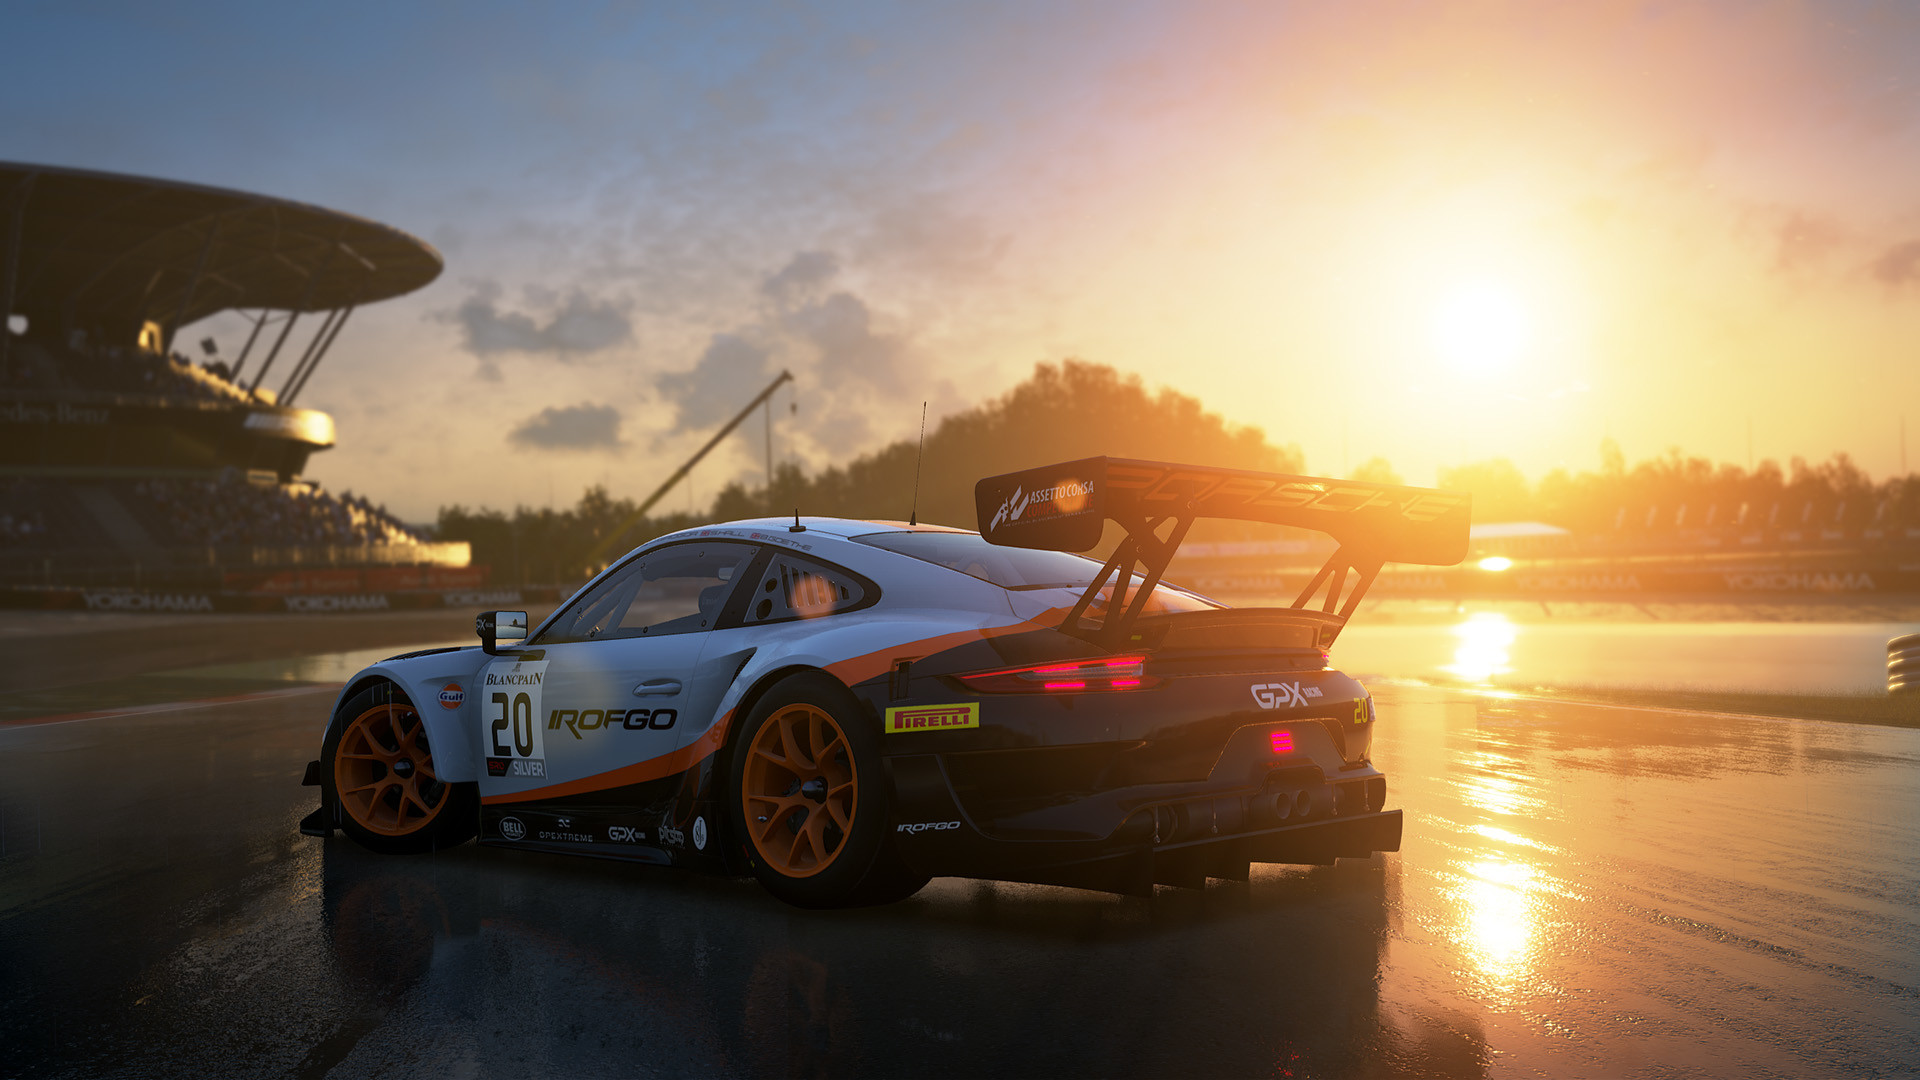 Porsche Porsche 911 Race Cars Sunset Sunrise Widebody Assetto Corsa Video Games Kunos Simulazioni 50 1920x1080